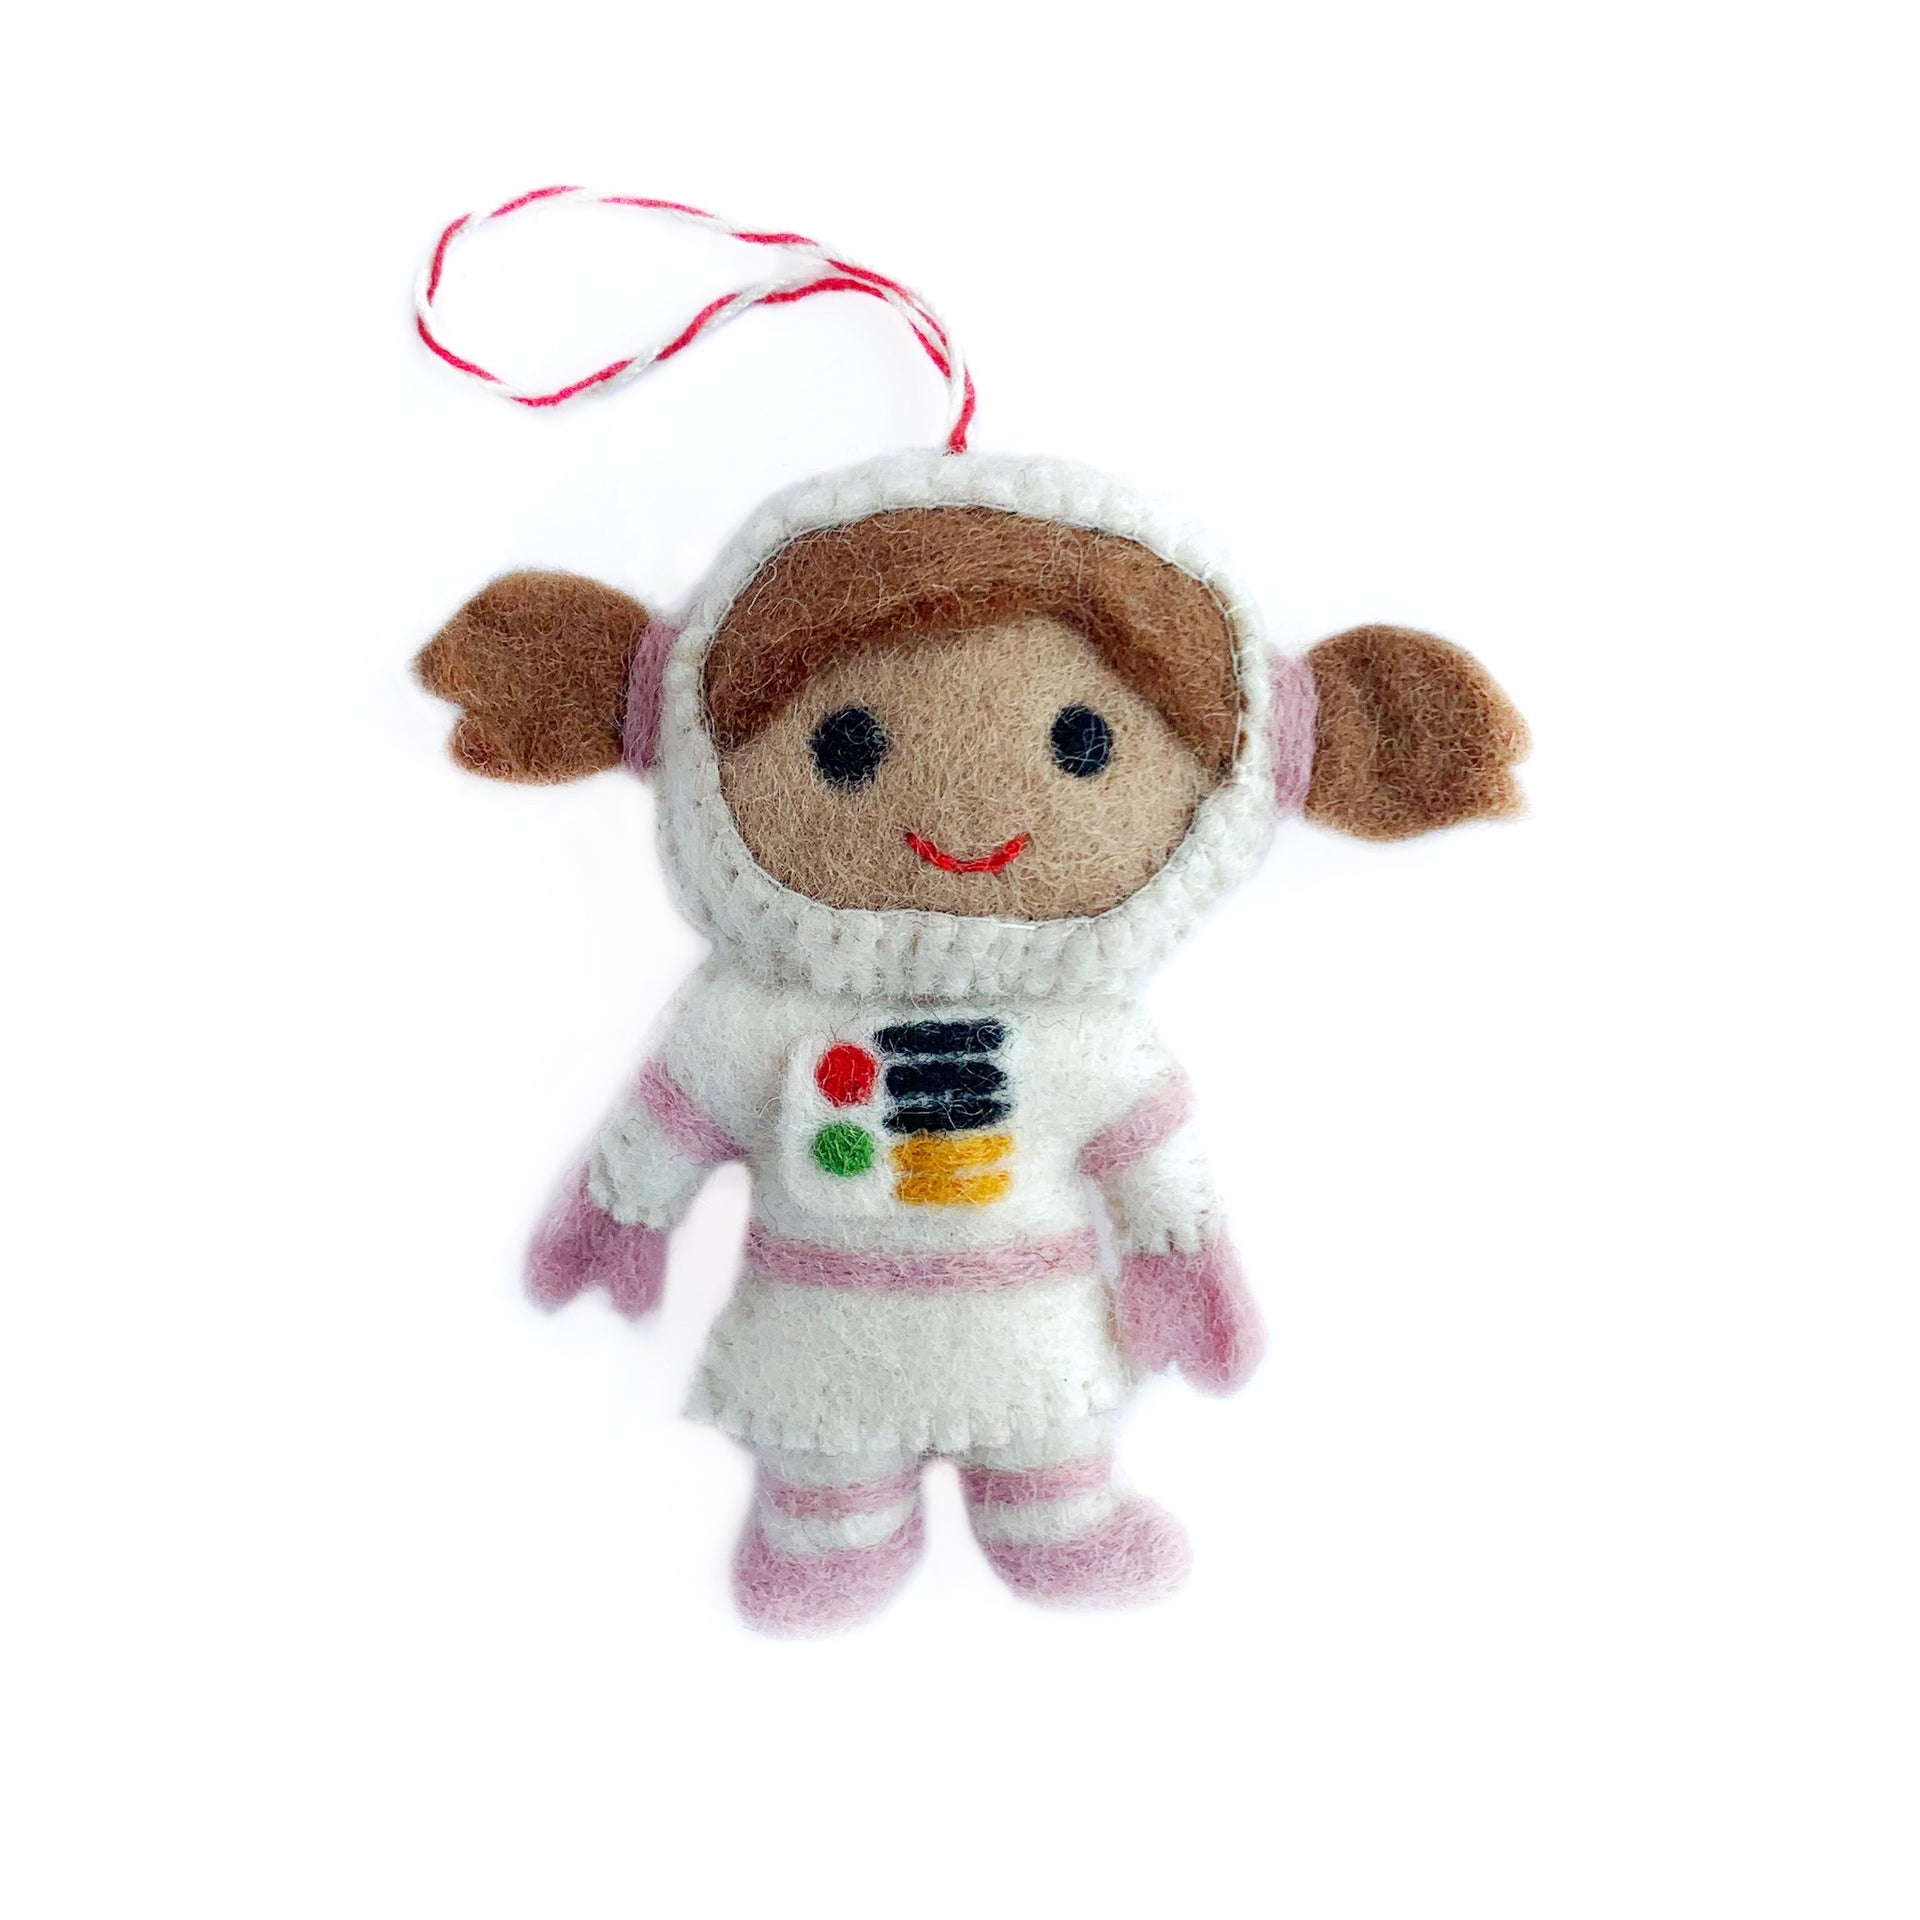 Little Girl Astronaut Christmas Ornaments made of felt wool by Ornaments 4 Orphans, a fair trade company.